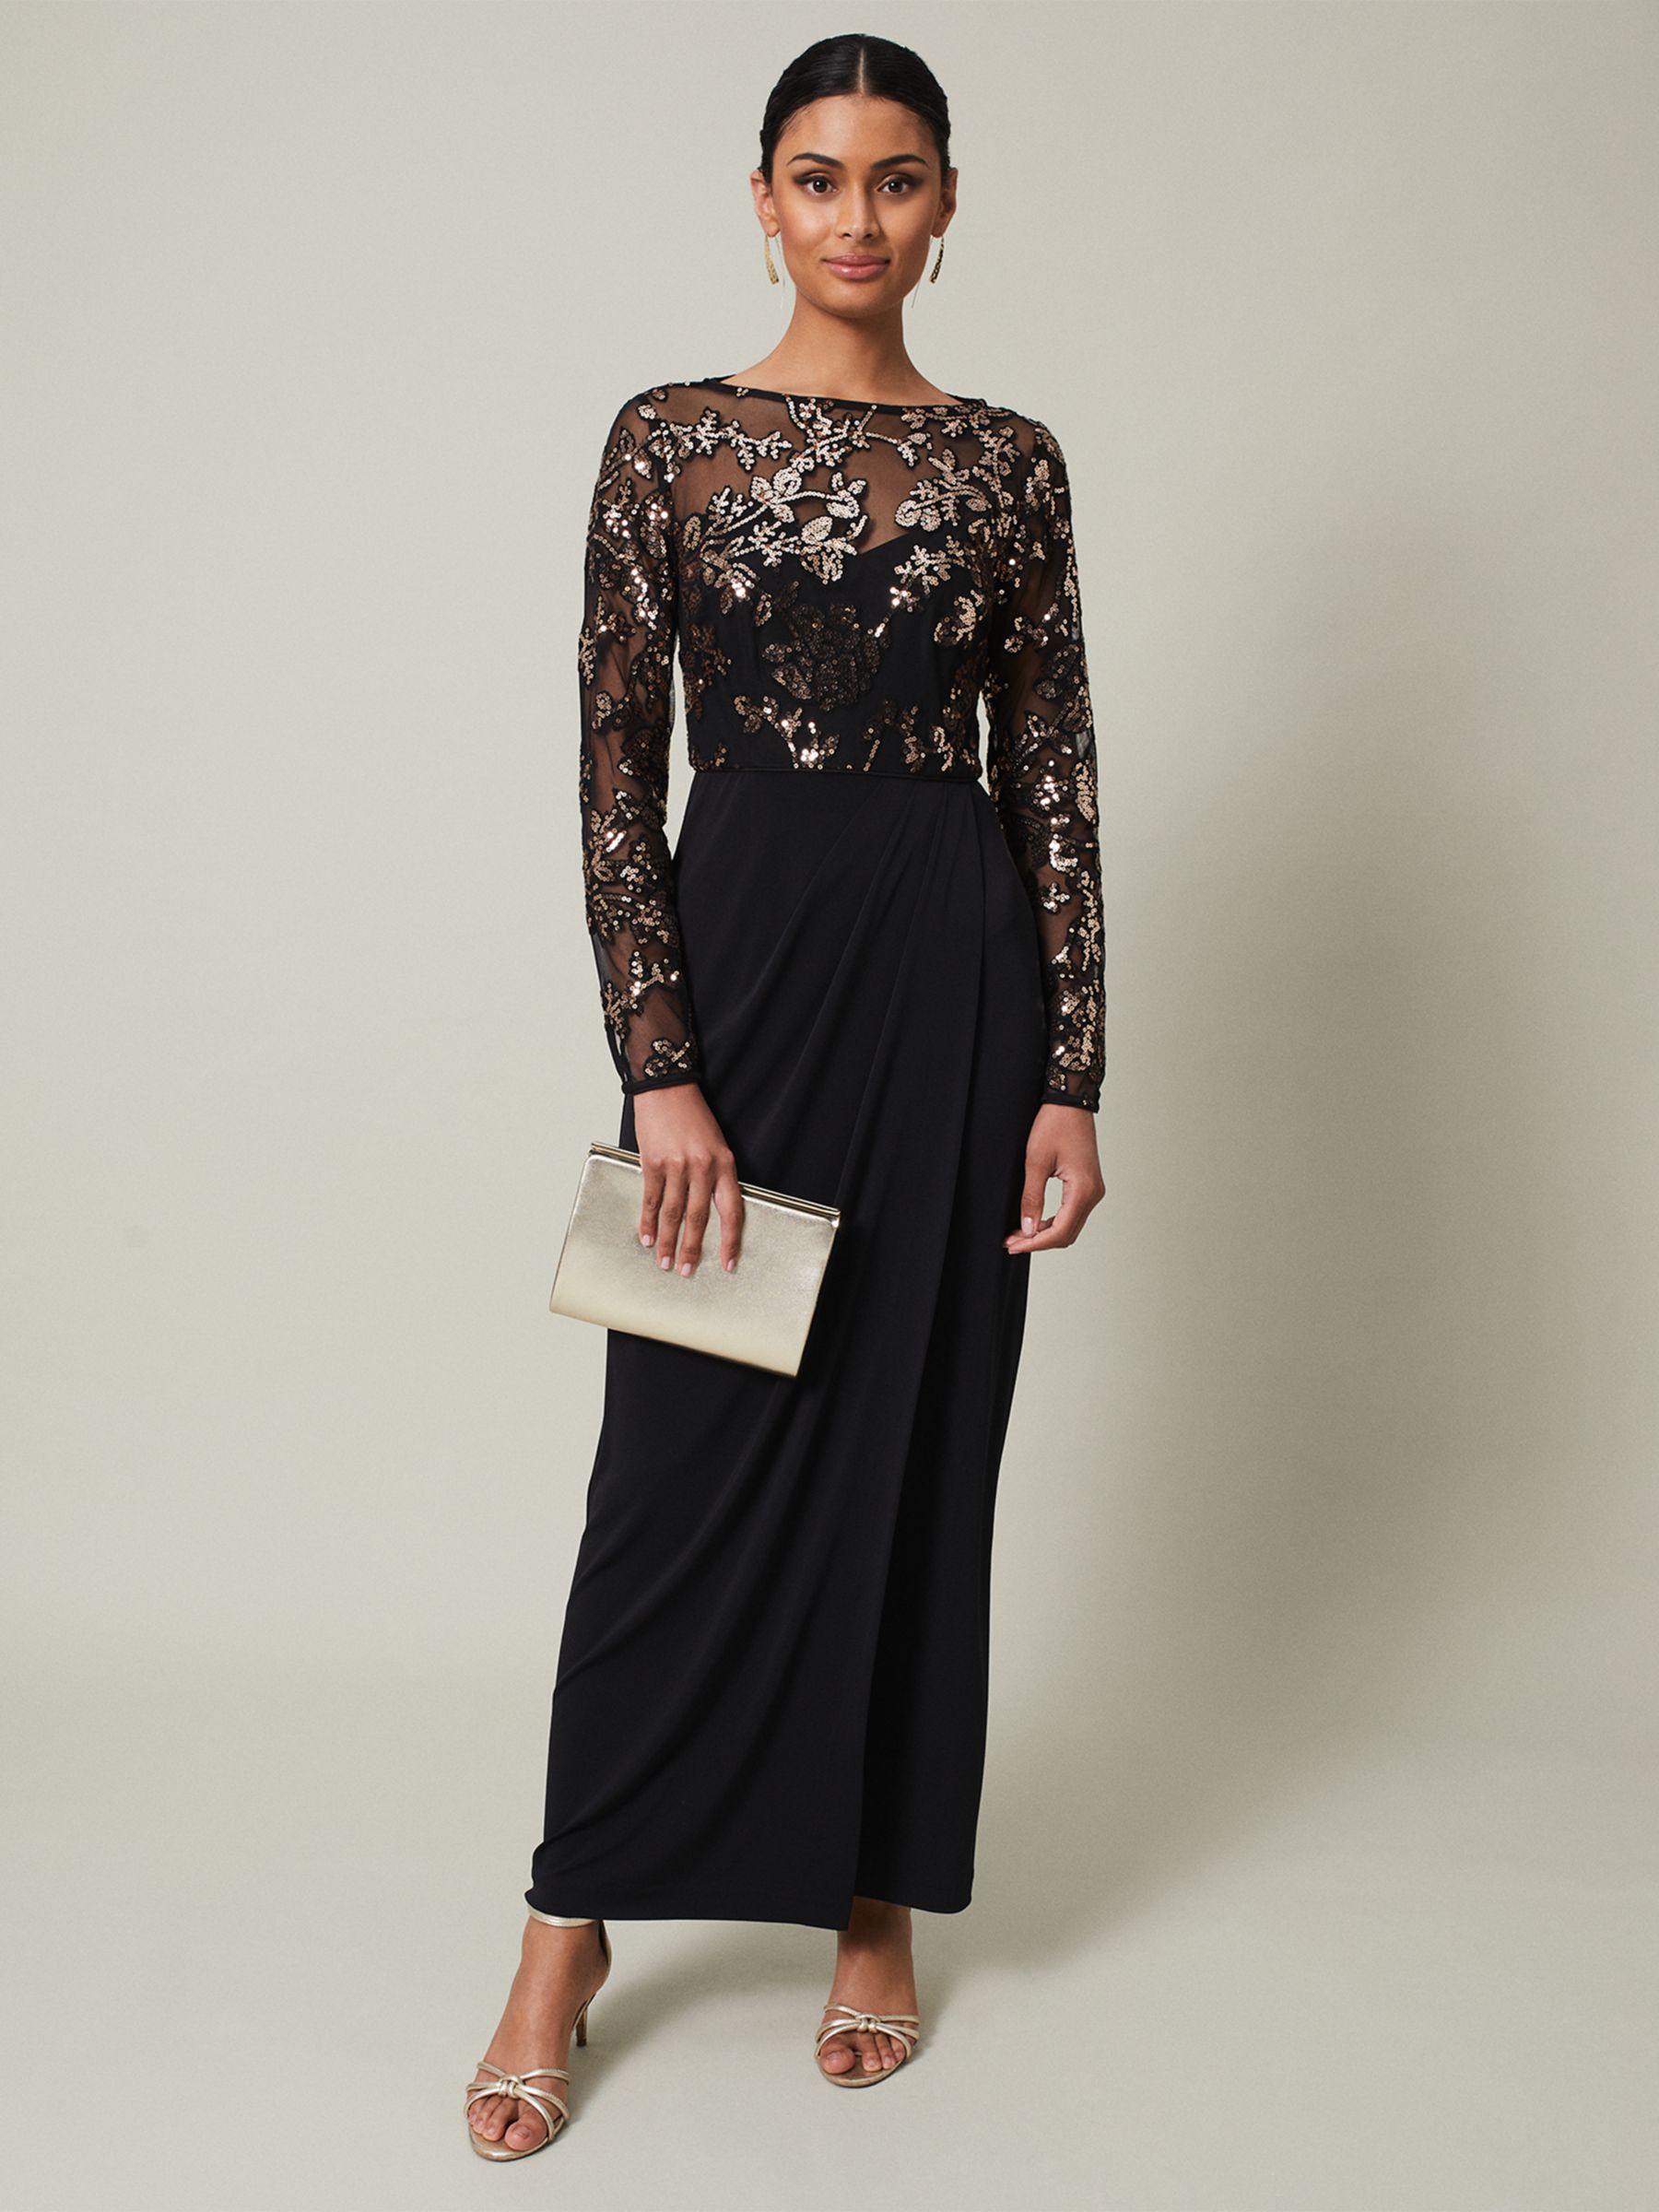 Phase Eight Collection 8 Jacinta Sequin Jersey Maxi Dress, Black/Gold At  John Lewis & Partners